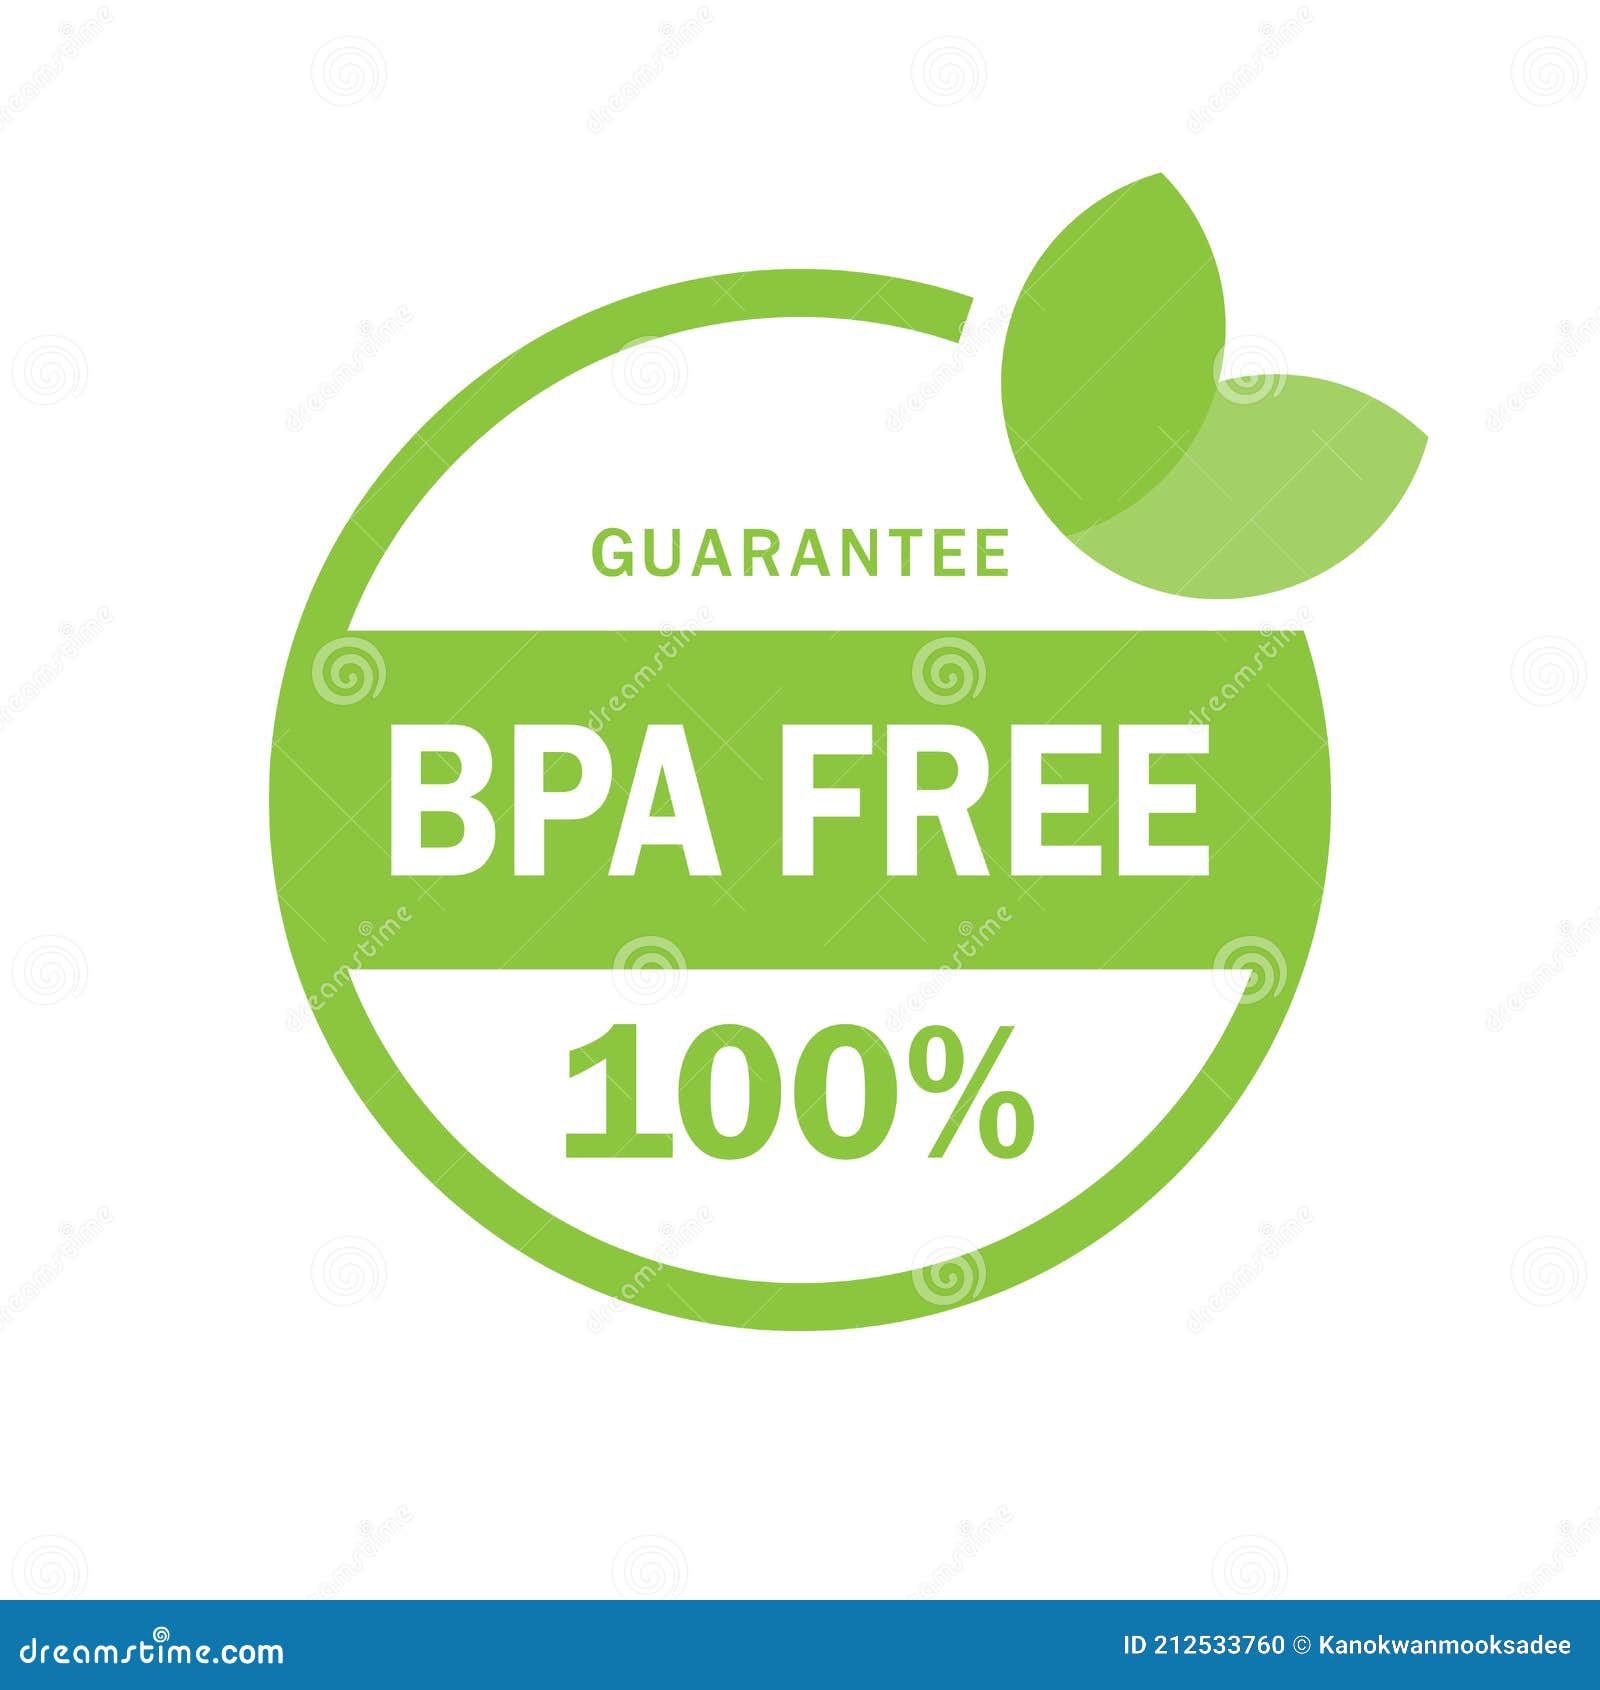 Premium Vector  Label bpa free in vector illustration for logo, icon,  badge. bpa bisphenol a for non toxic plastic